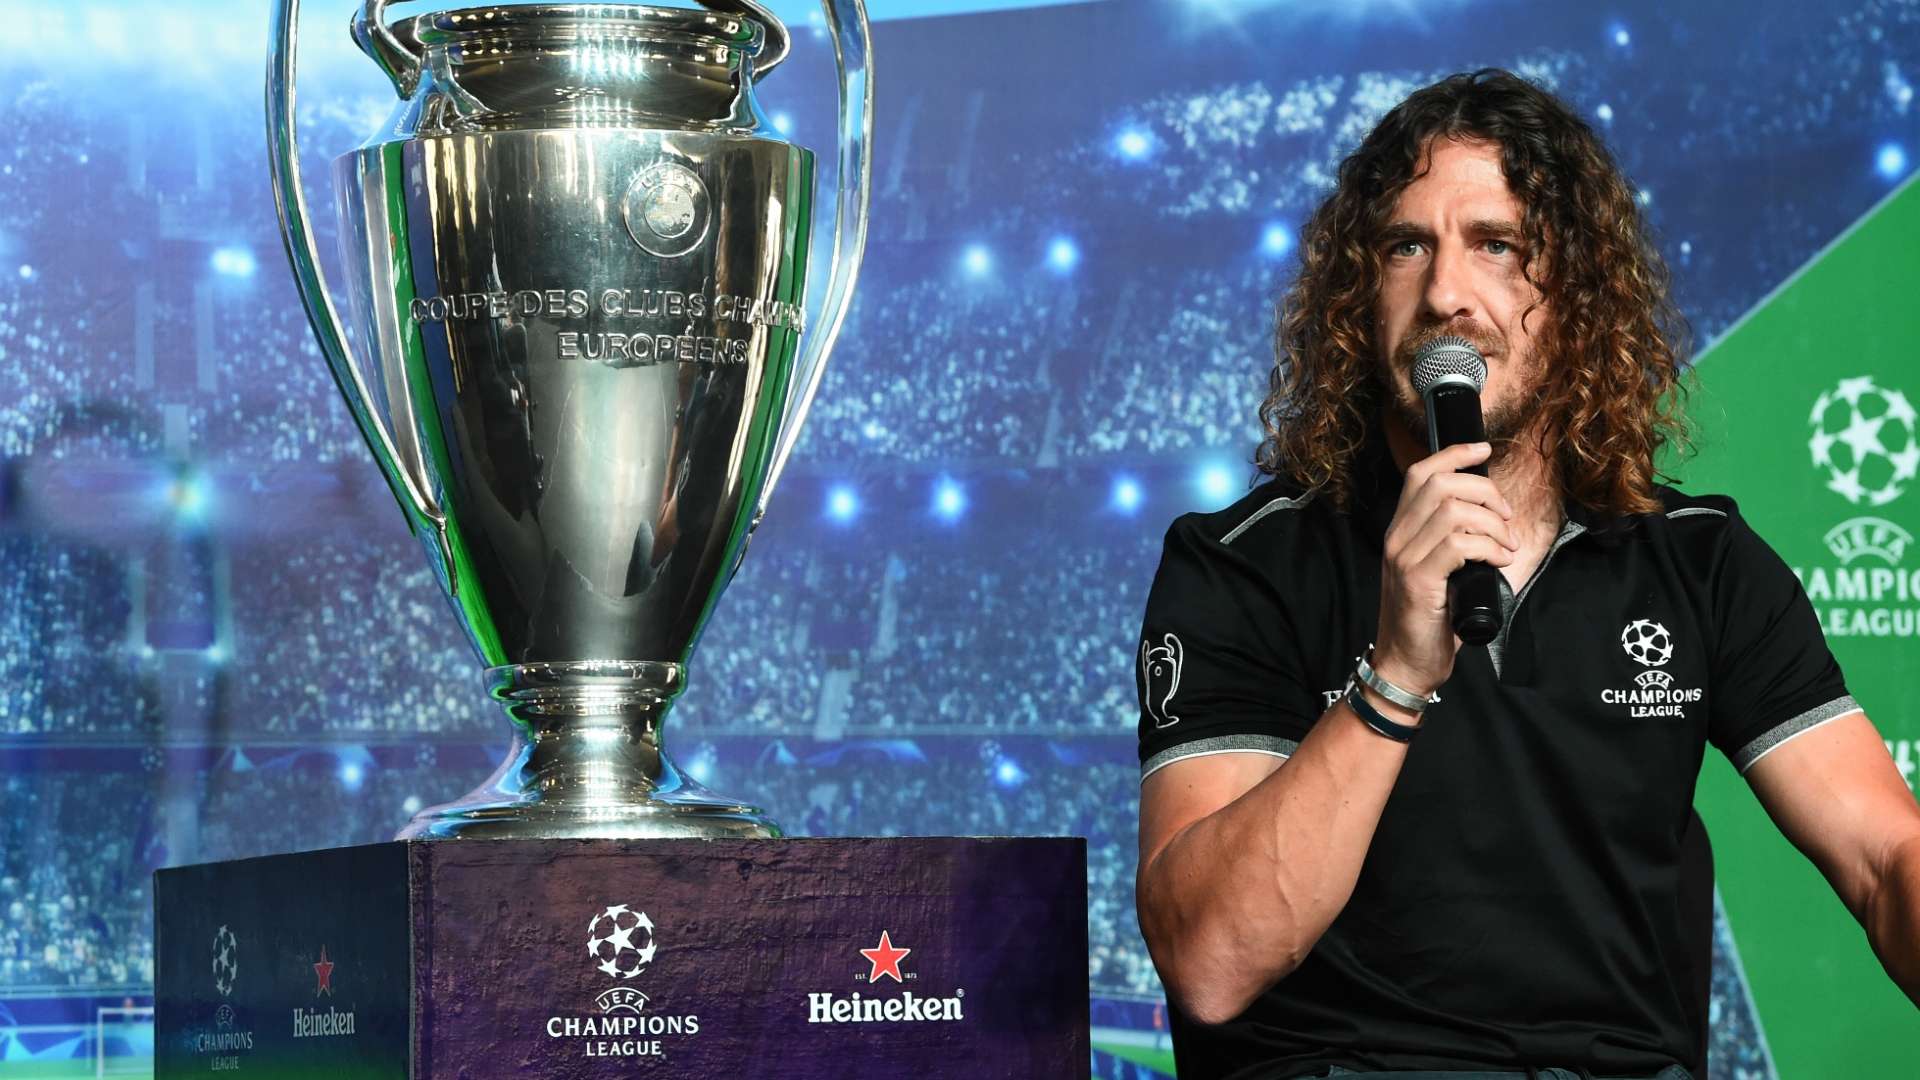 Carles Puyol UEFA Champions League Trophy Tour Presented by Heineken, Lagos, Nigeria